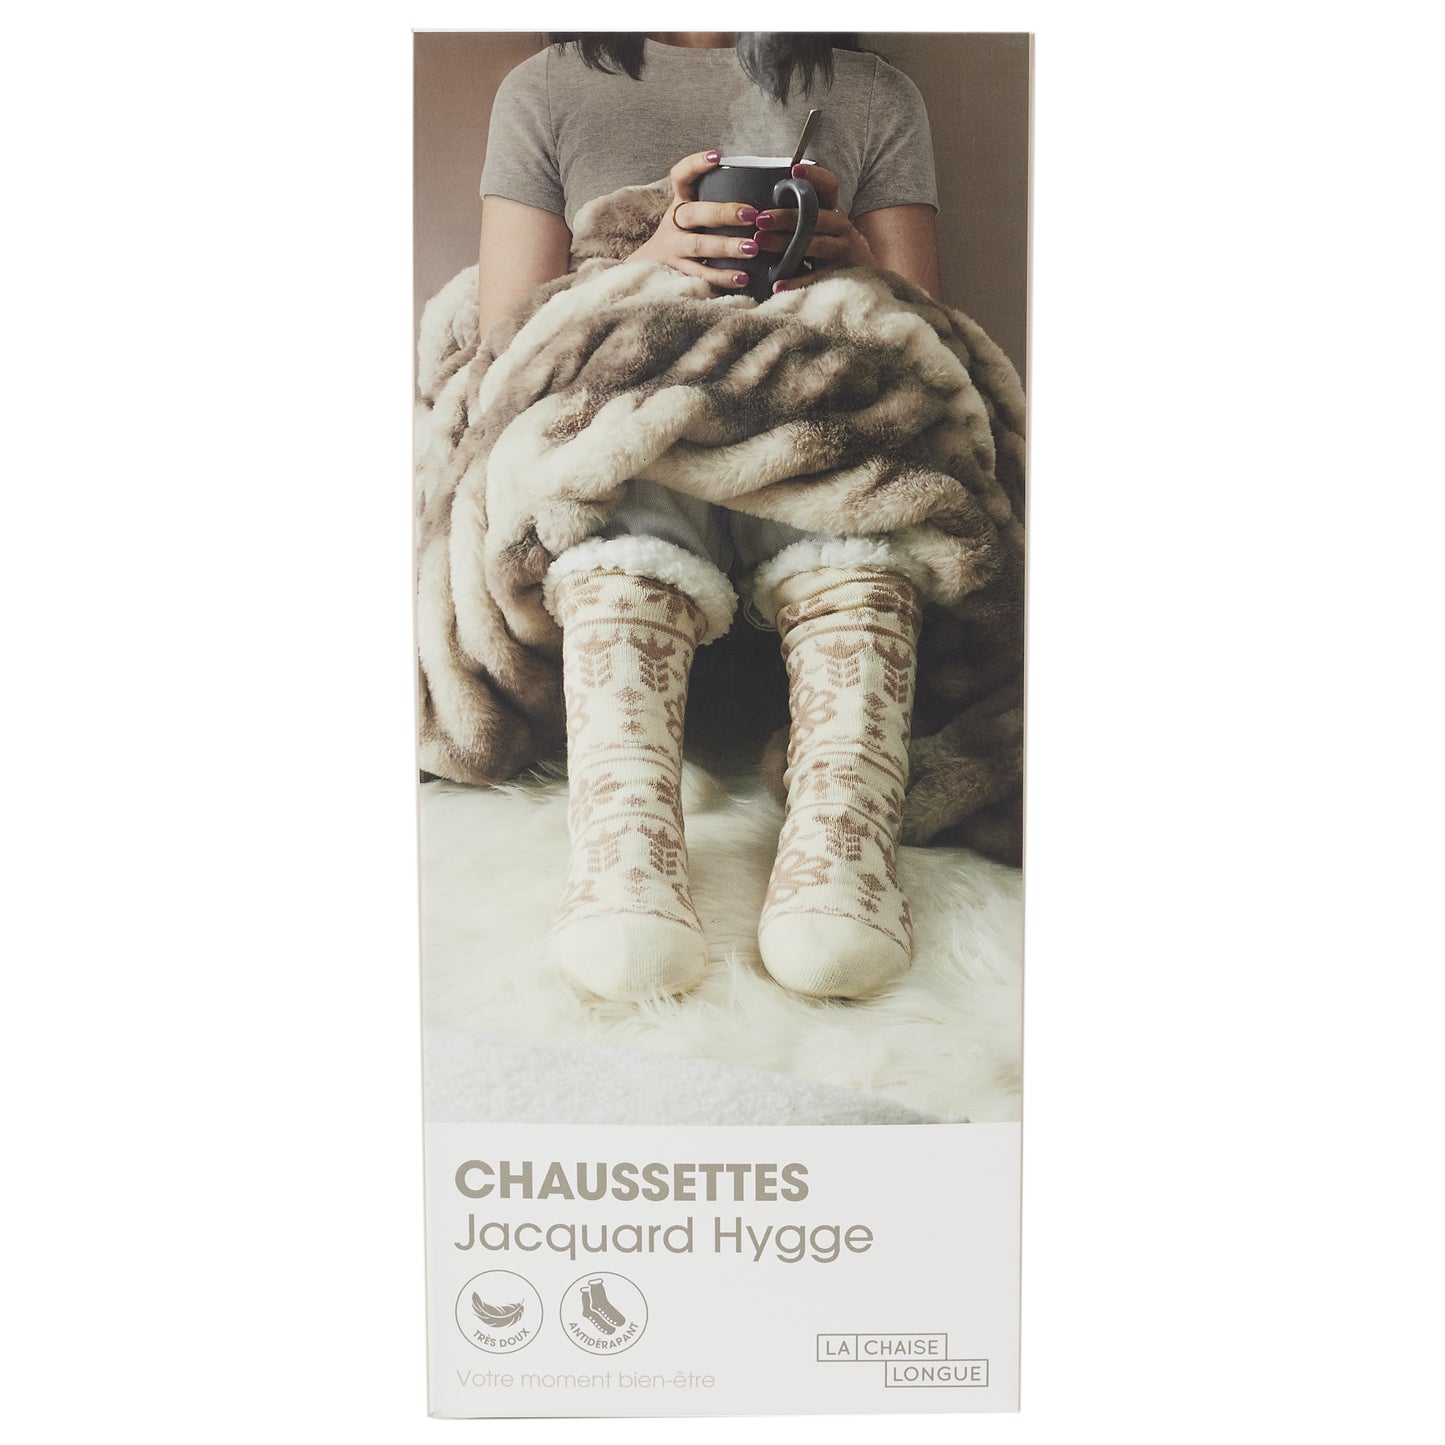 CHAUSSETTES SHERPA HYGGE - La Chaise Longue